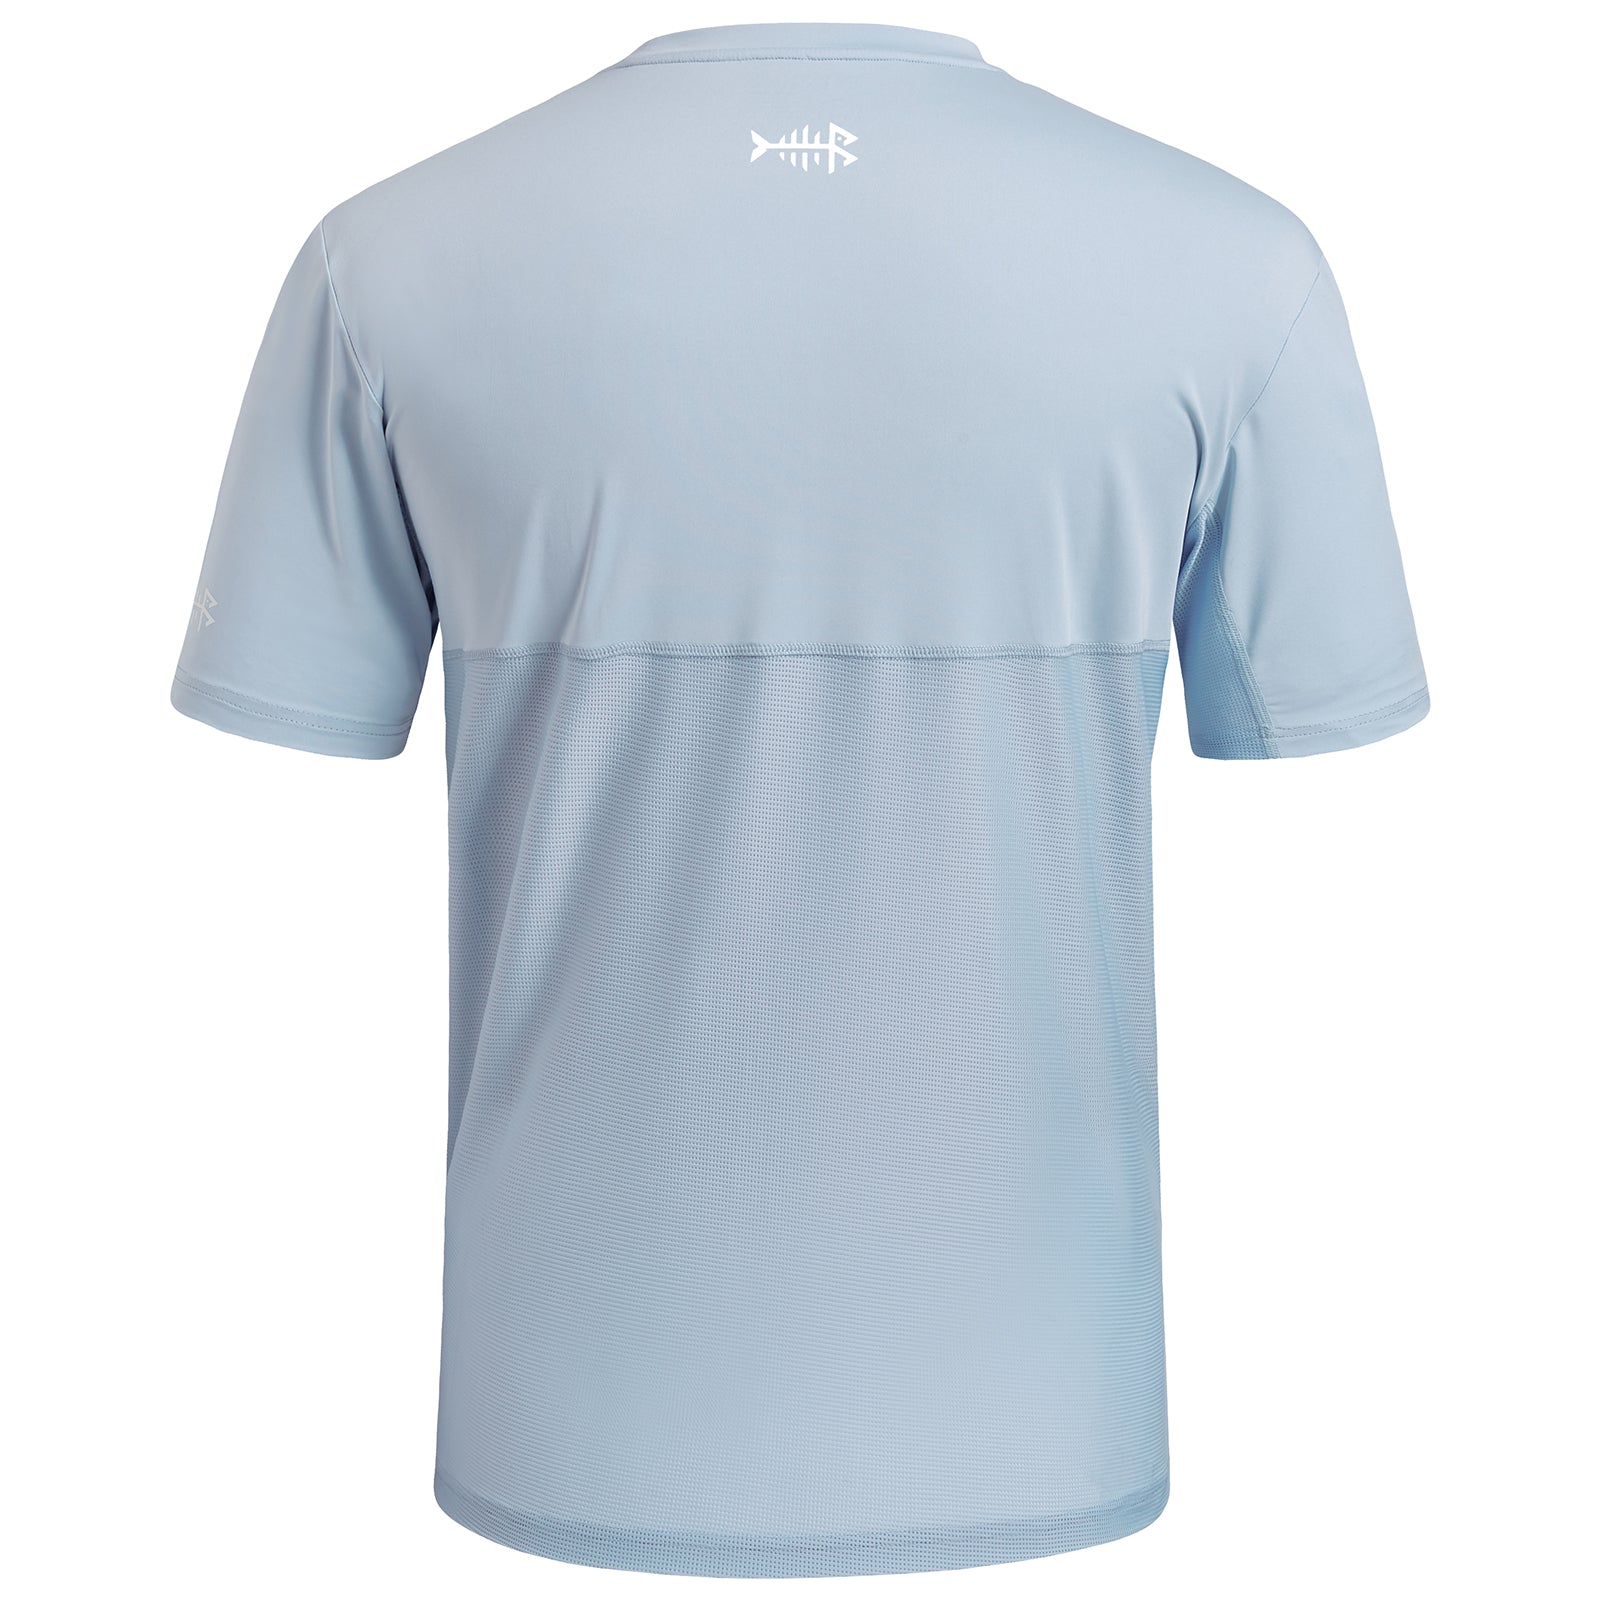 Bassdash Men’s UPF 50+ Performance Fishing T-Shirt Quick Dry Short Sleeve Active Shirt White/Blue Logo / M